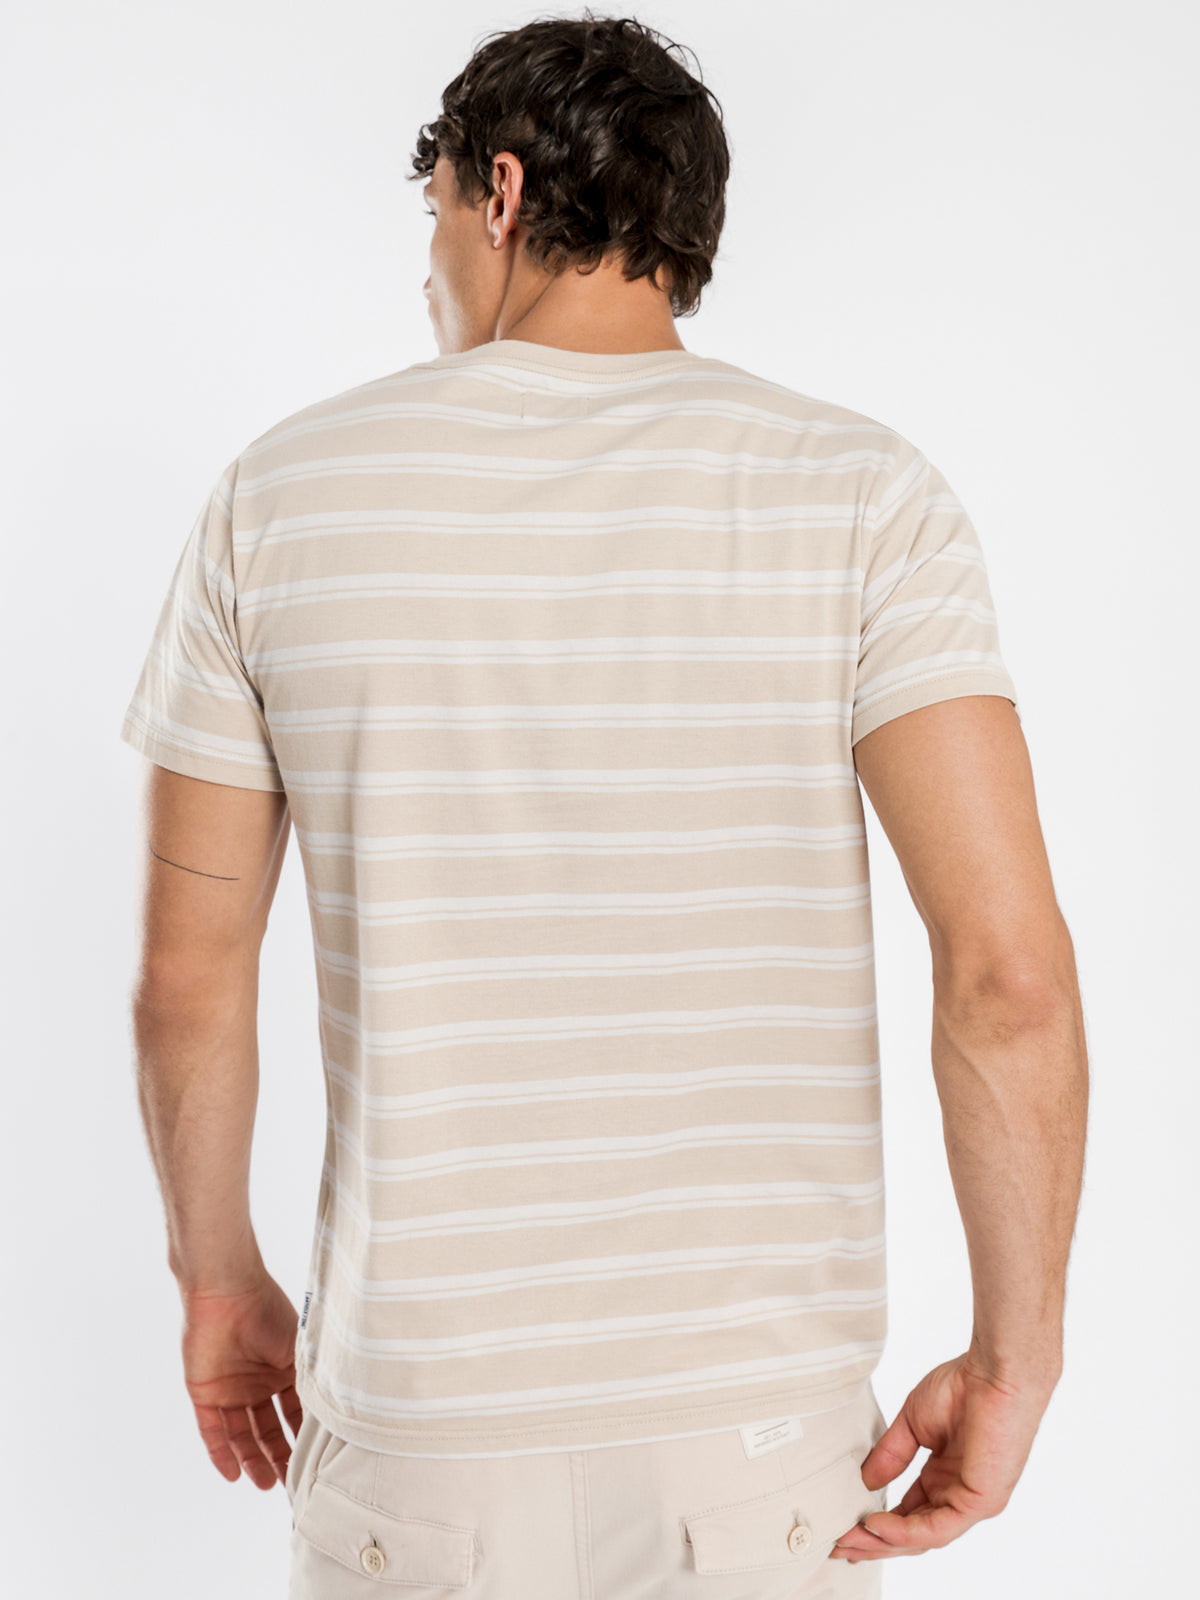 Cayo Stripe T-Shirt in Stone